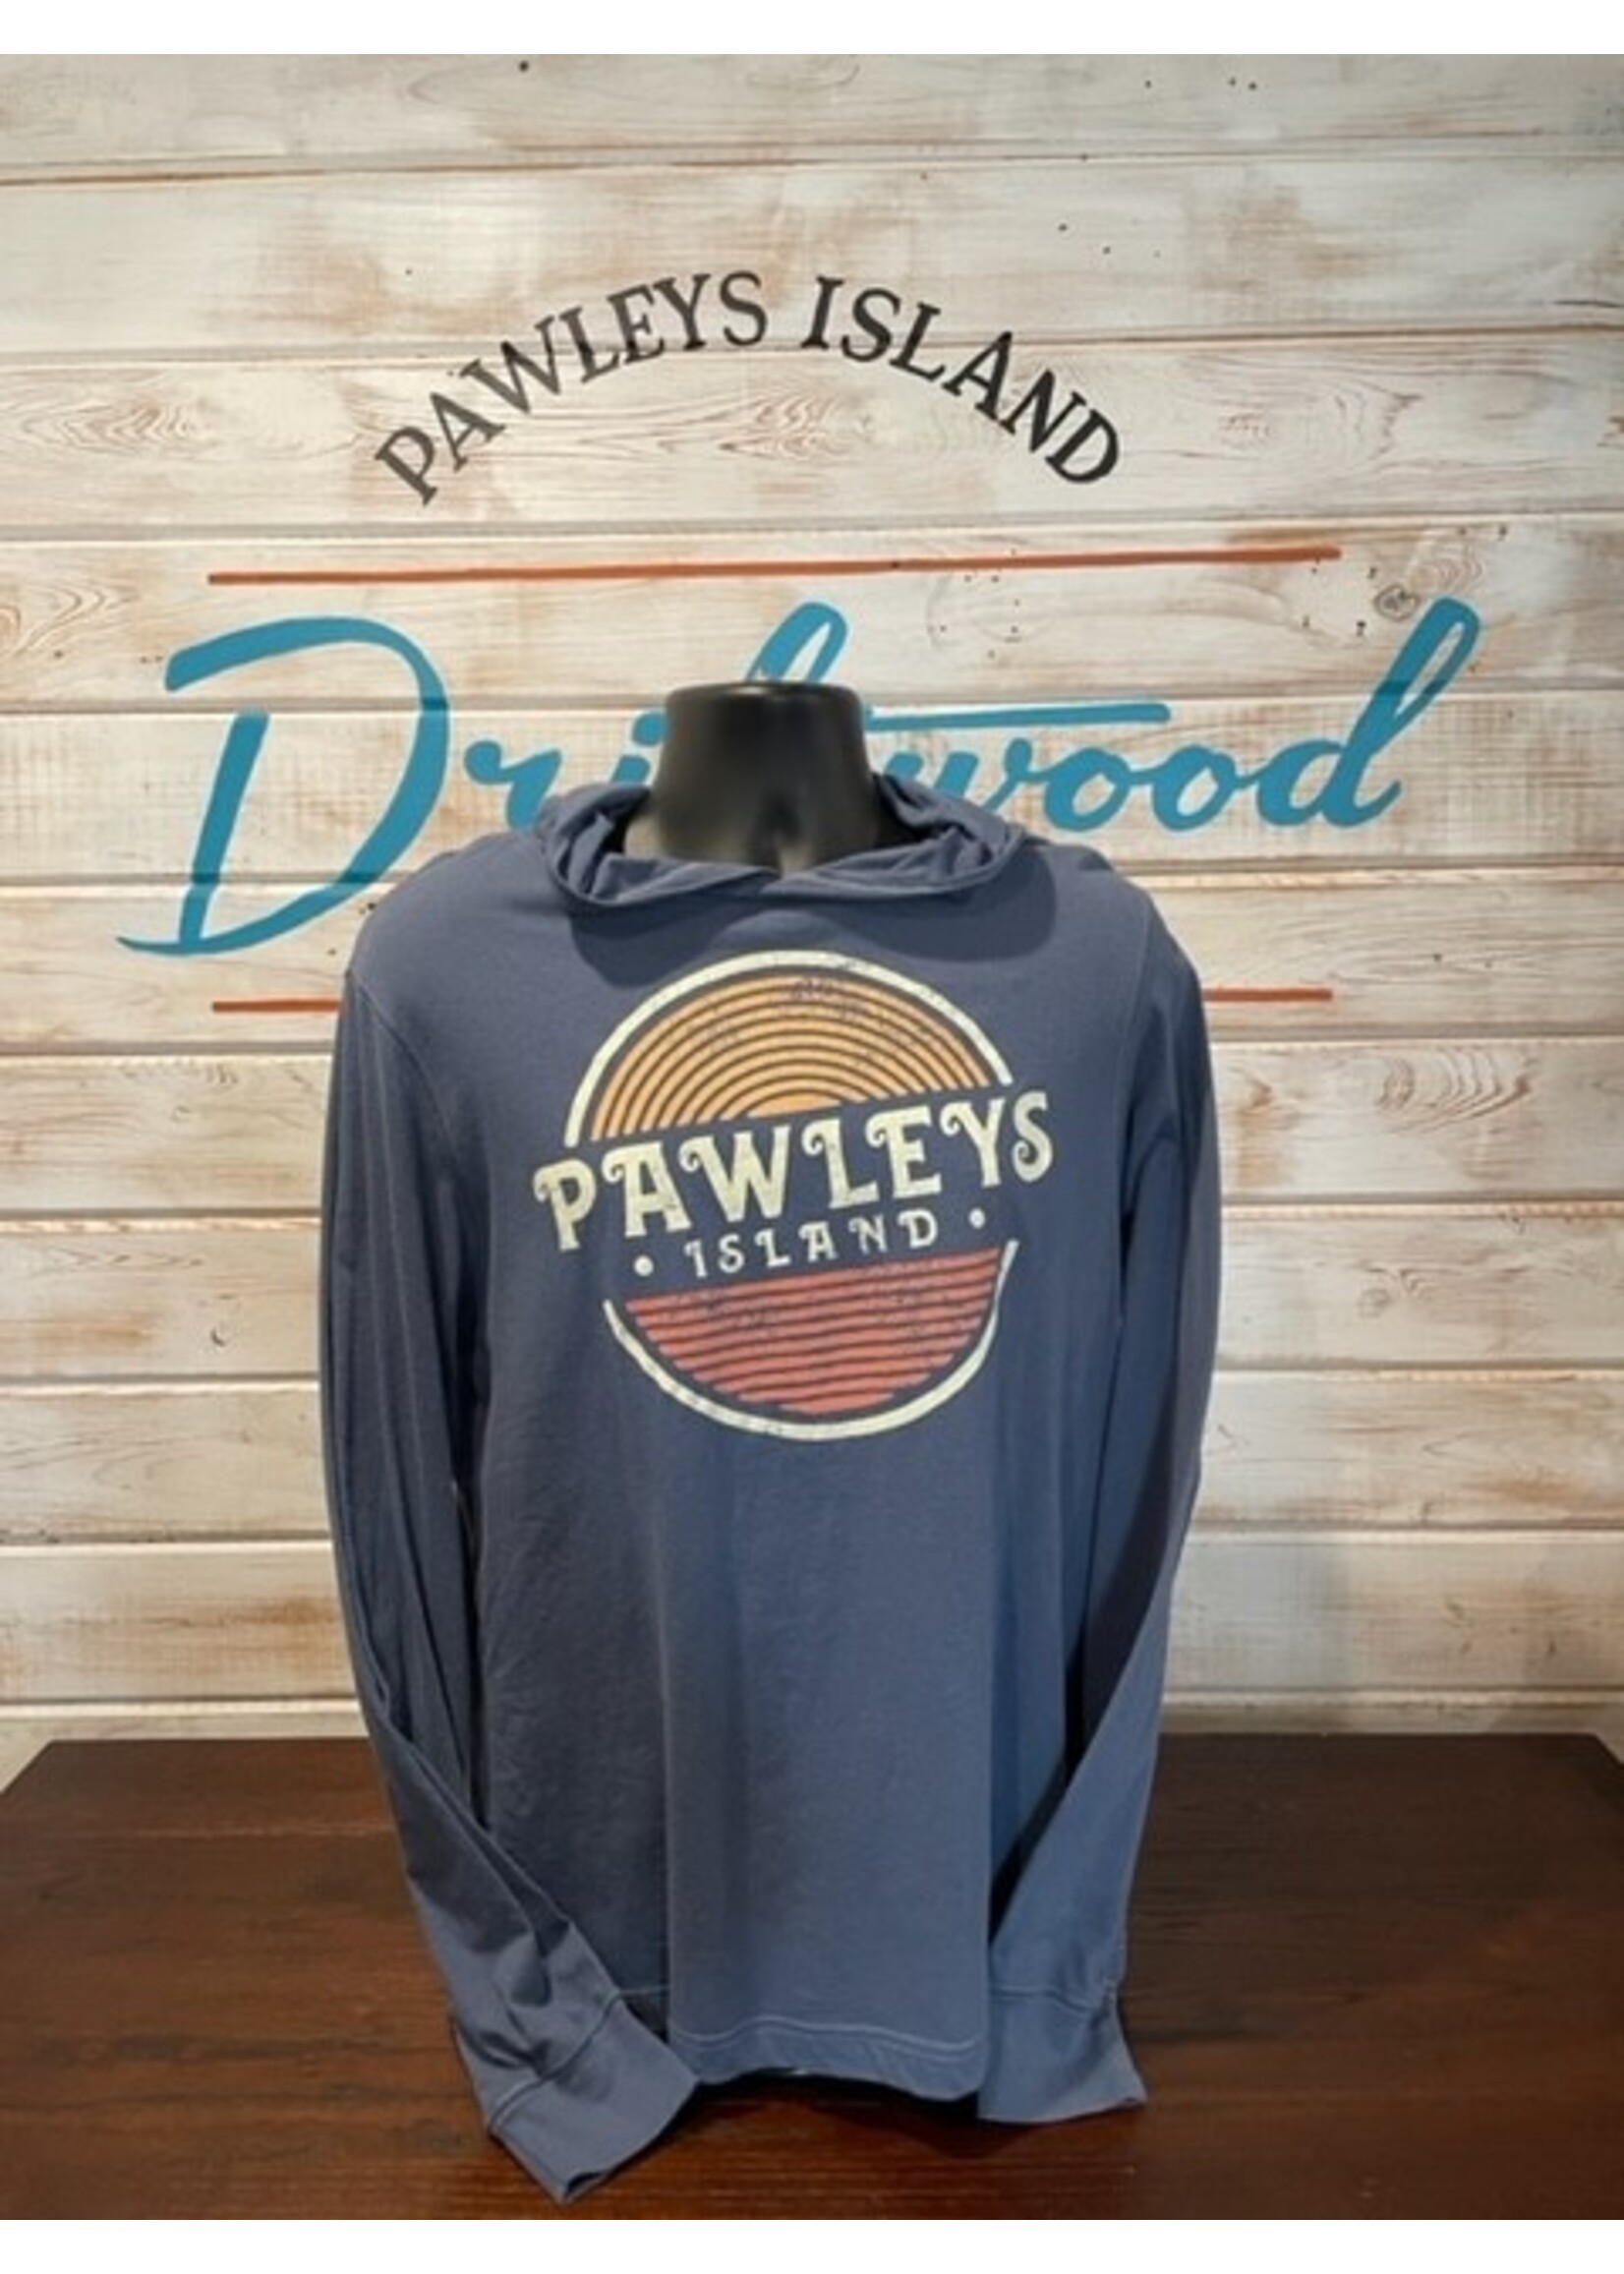 Pawleys Island Outdoors - New PI Outdoors camo hoodies. Come check